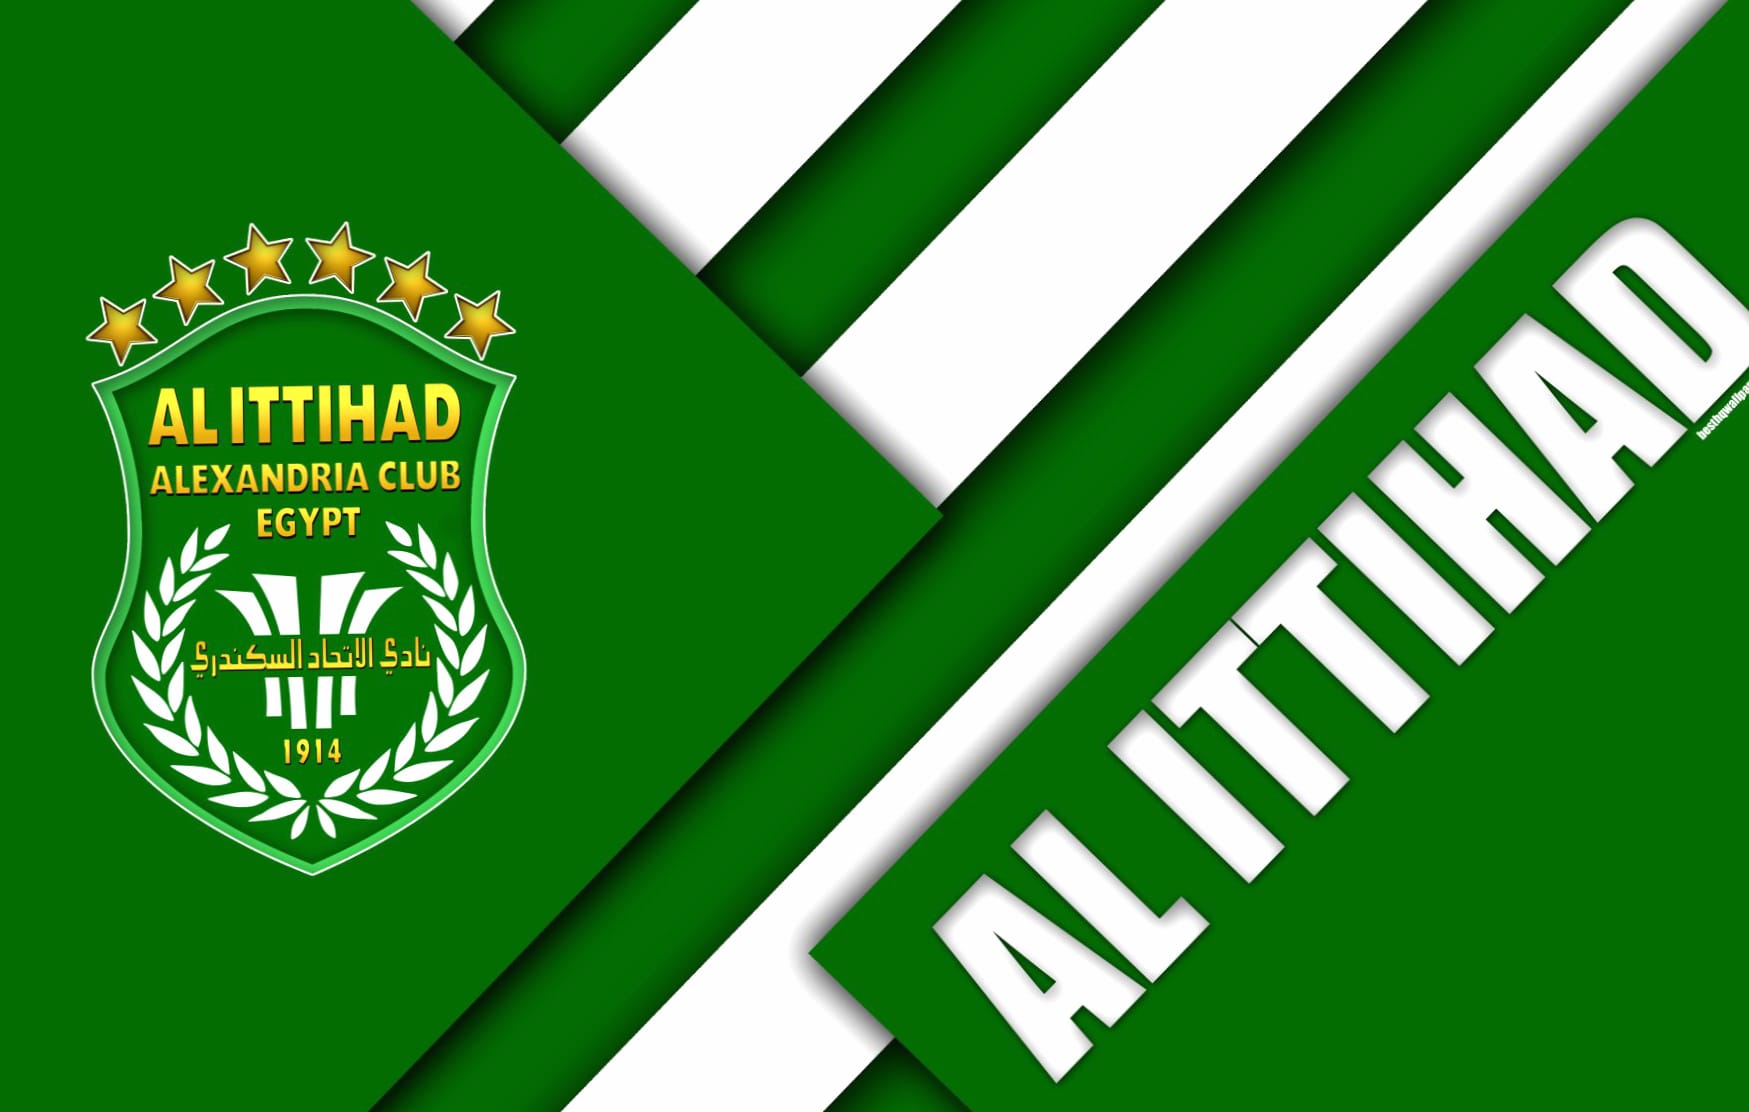 Al Ittihad Alexandria Club wallpapers HD quality